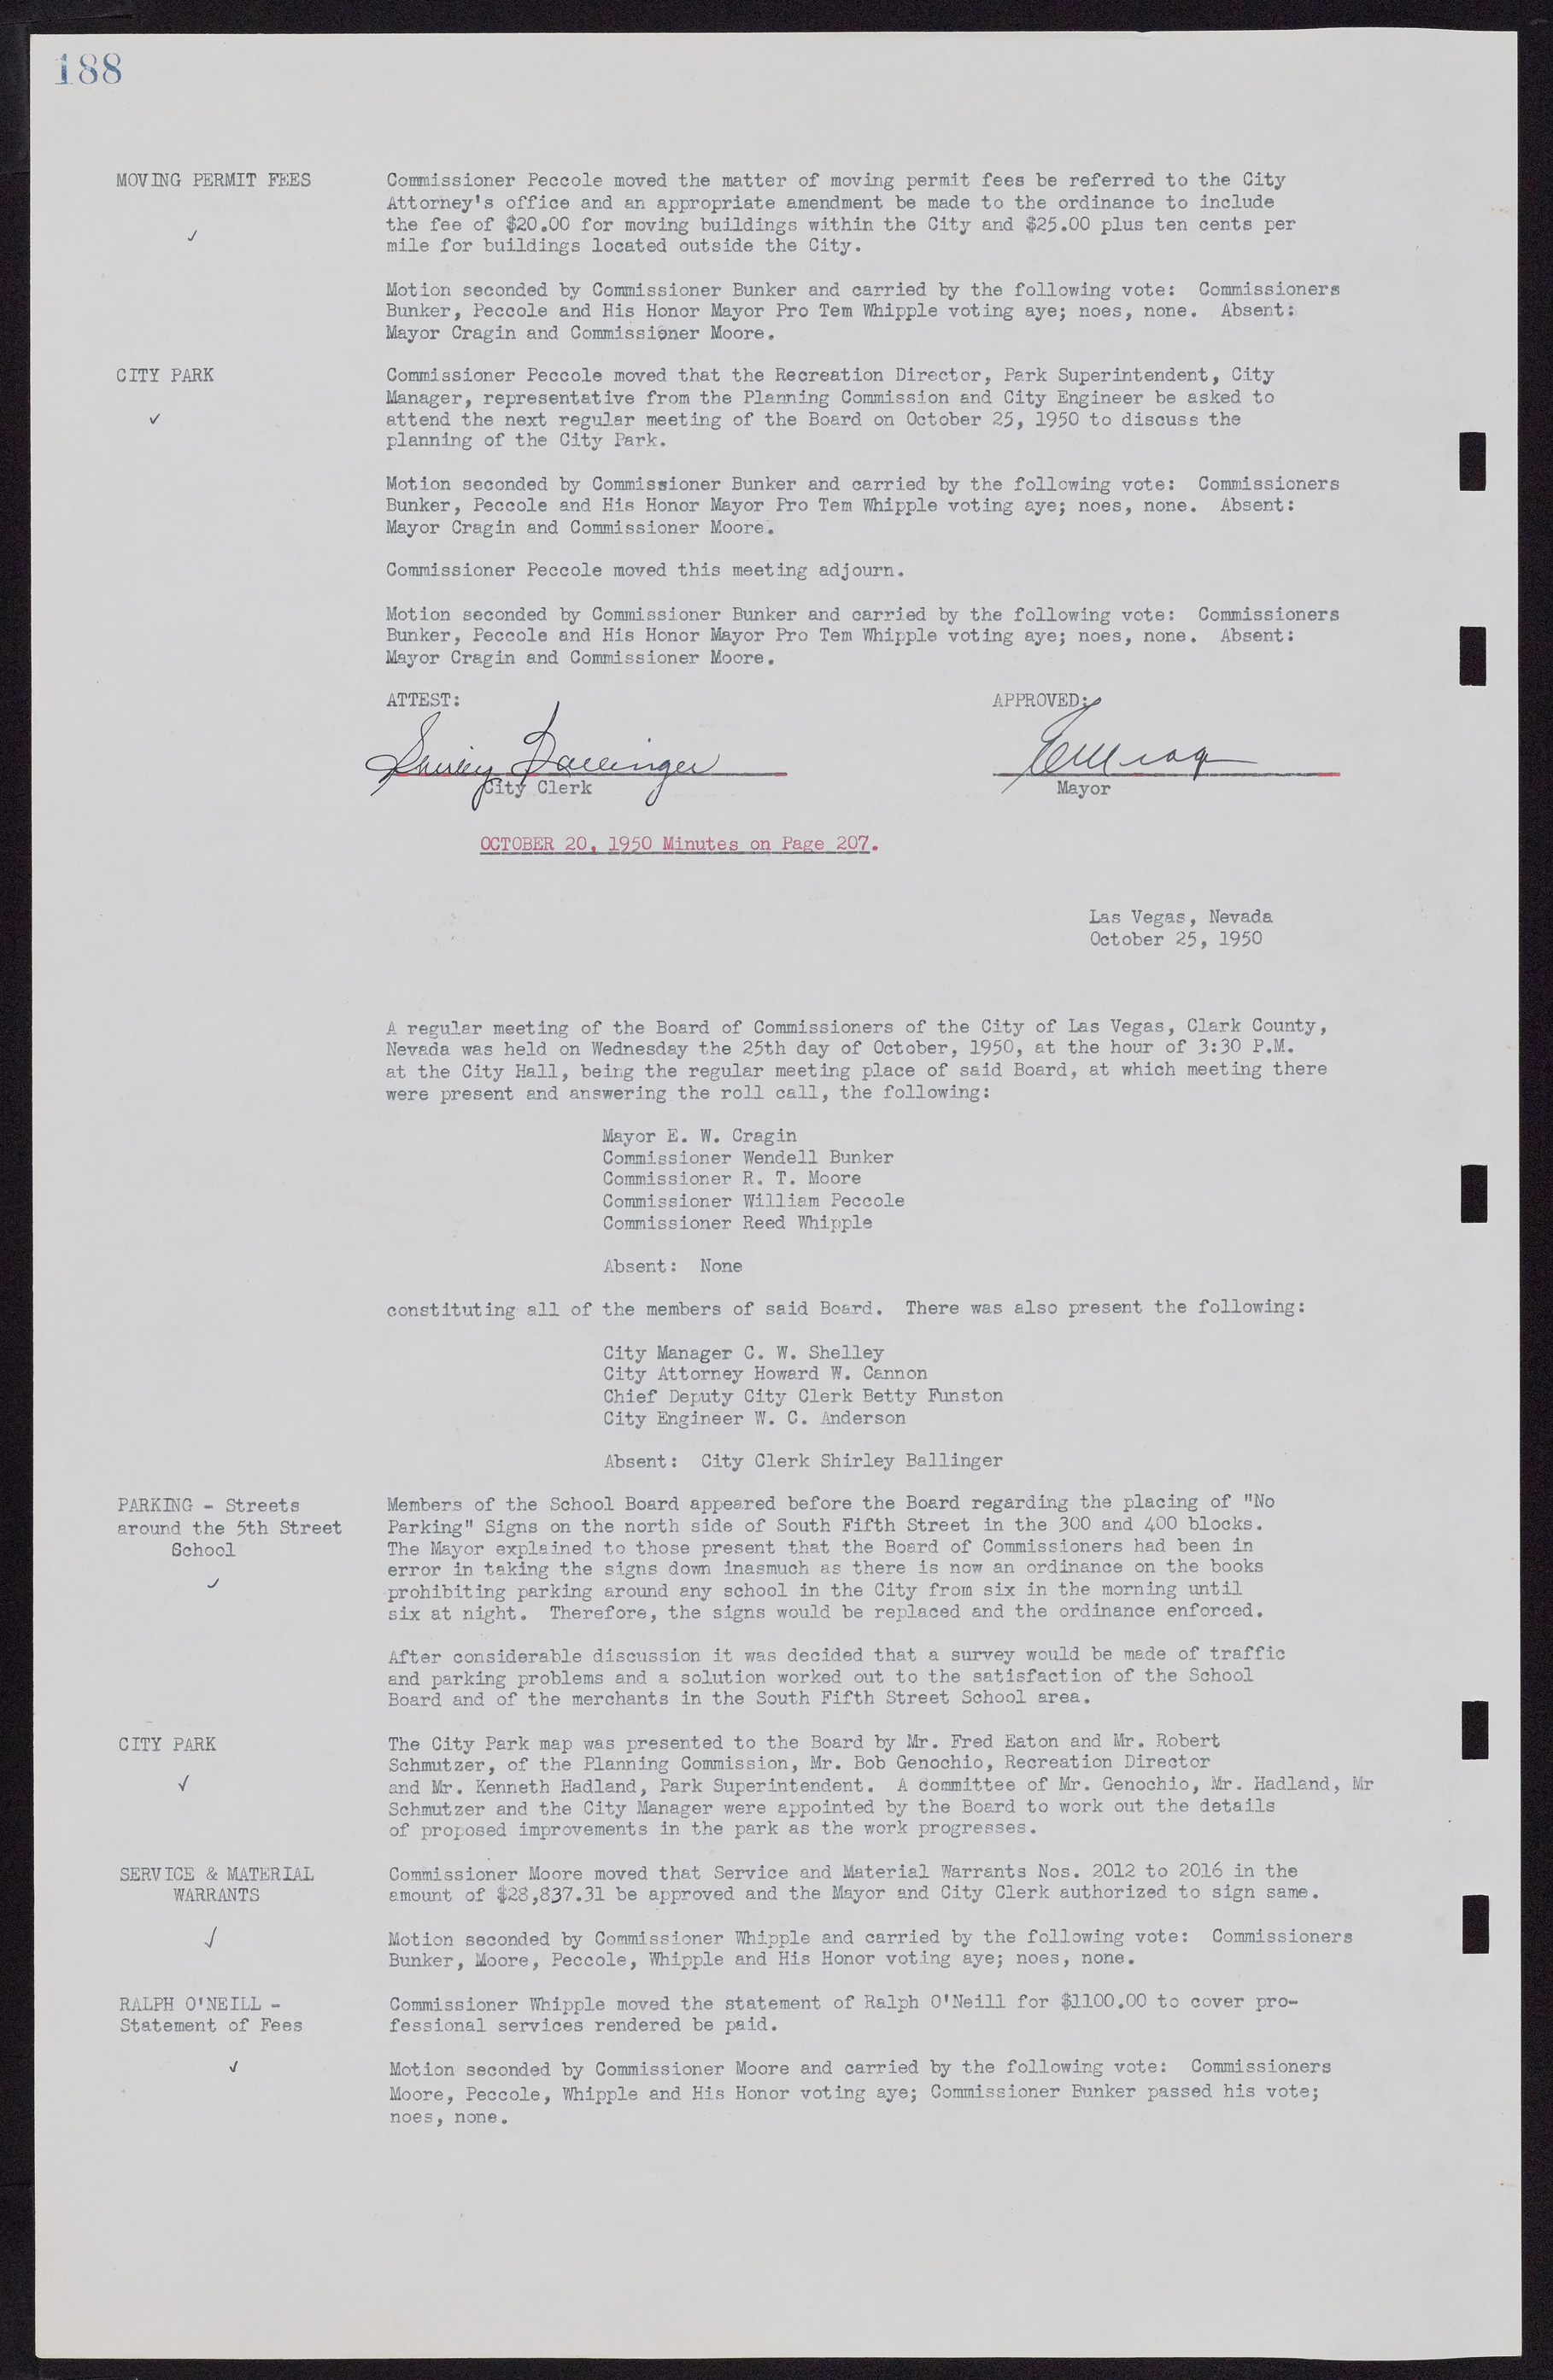 Las Vegas City Commission Minutes, November 7, 1949 to May 21, 1952, lvc000007-198